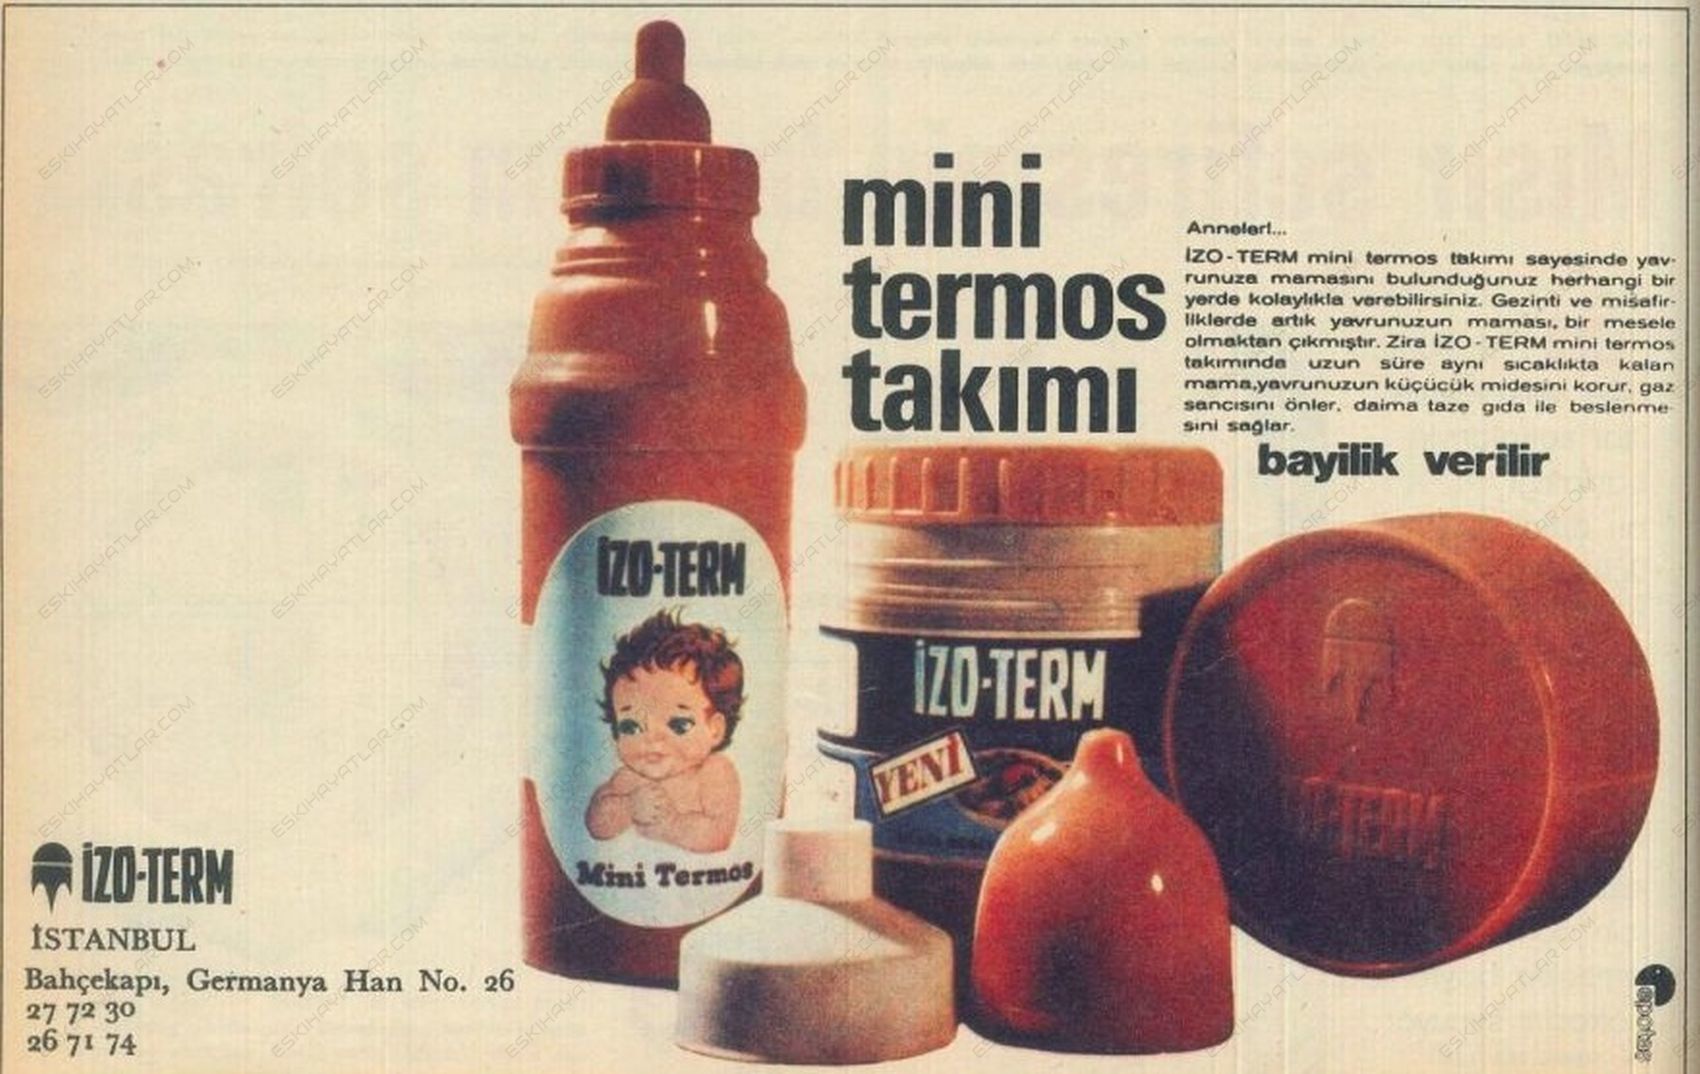 0412-izoterm-mini-termos-takimi-yetmisli-yillarda-bebek-bakimi